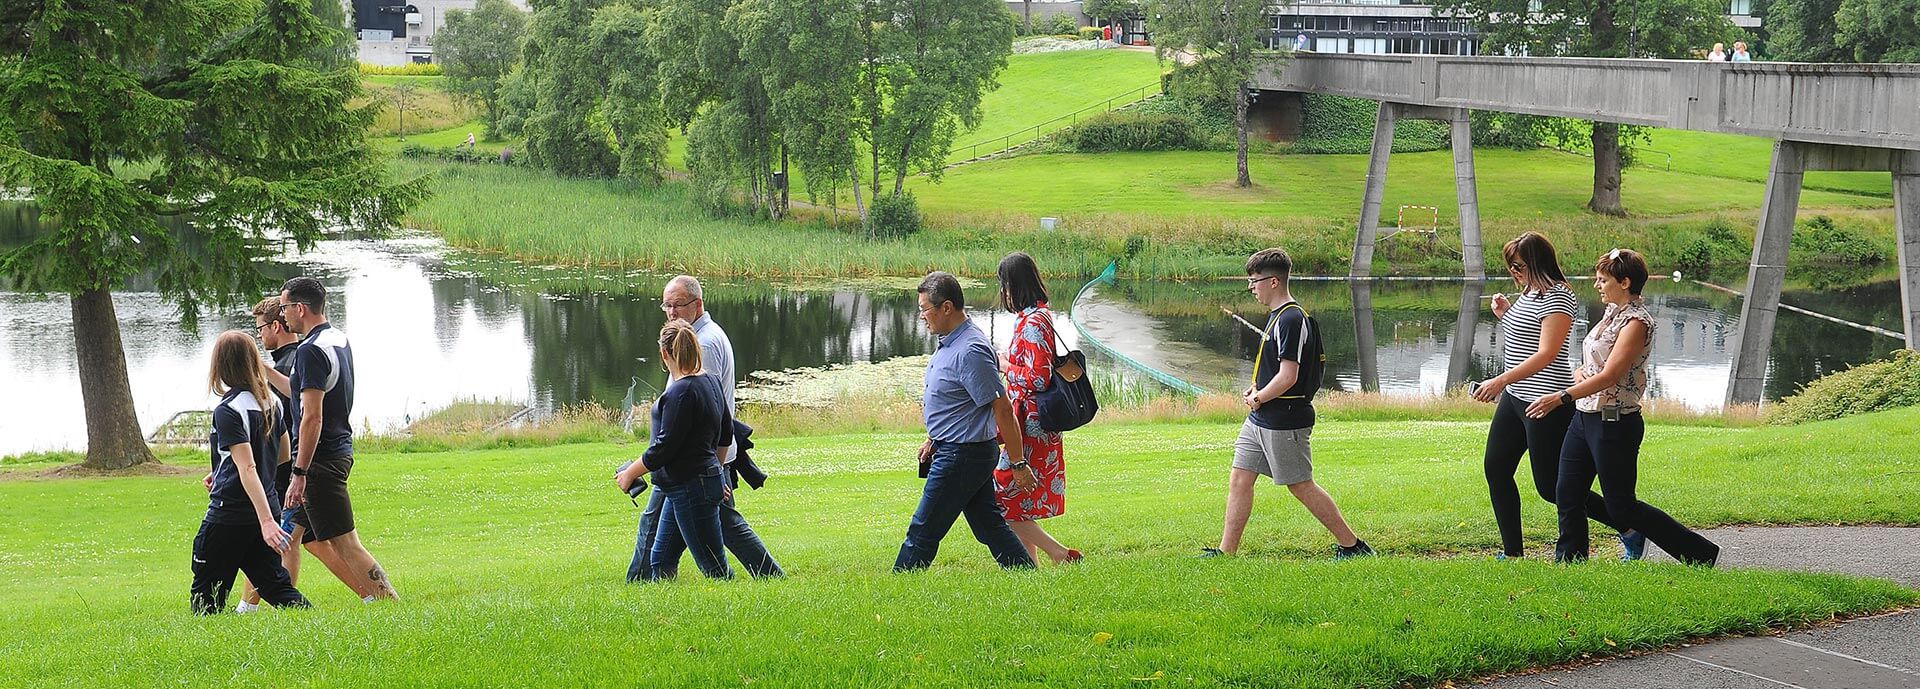 Group of people walking along by loch